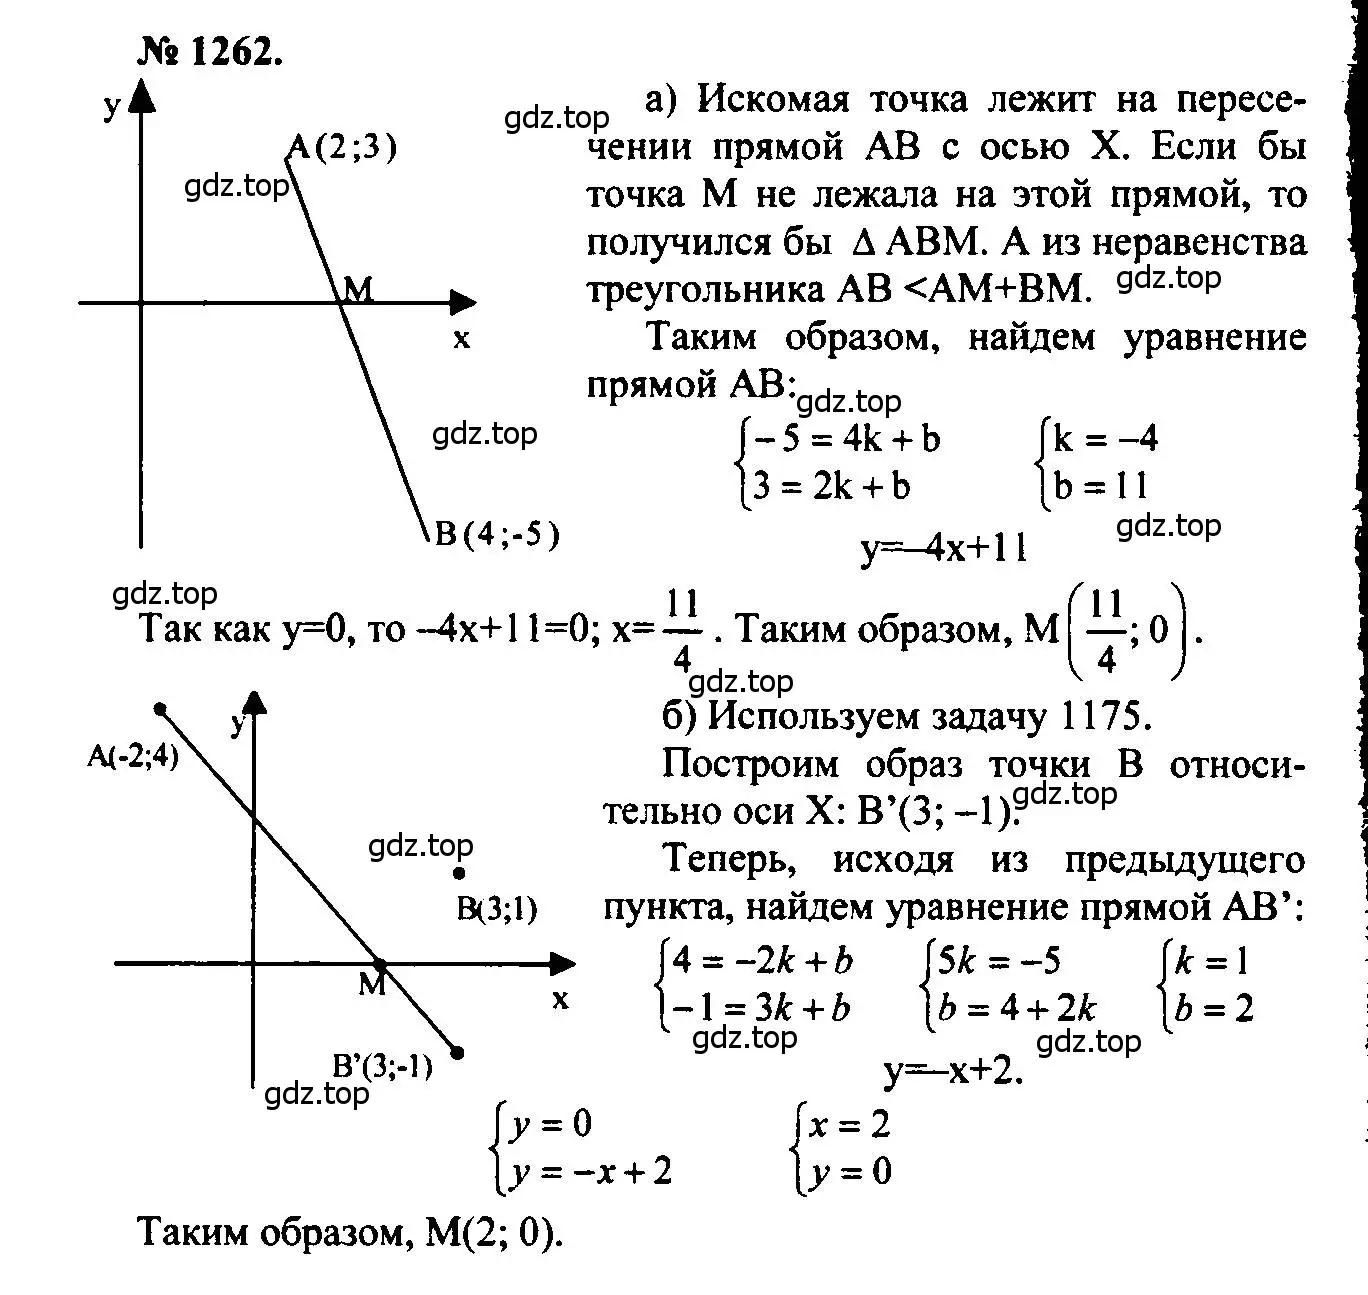 Решение 5. номер 1262 (страница 330) гдз по геометрии 7-9 класс Атанасян, Бутузов, учебник